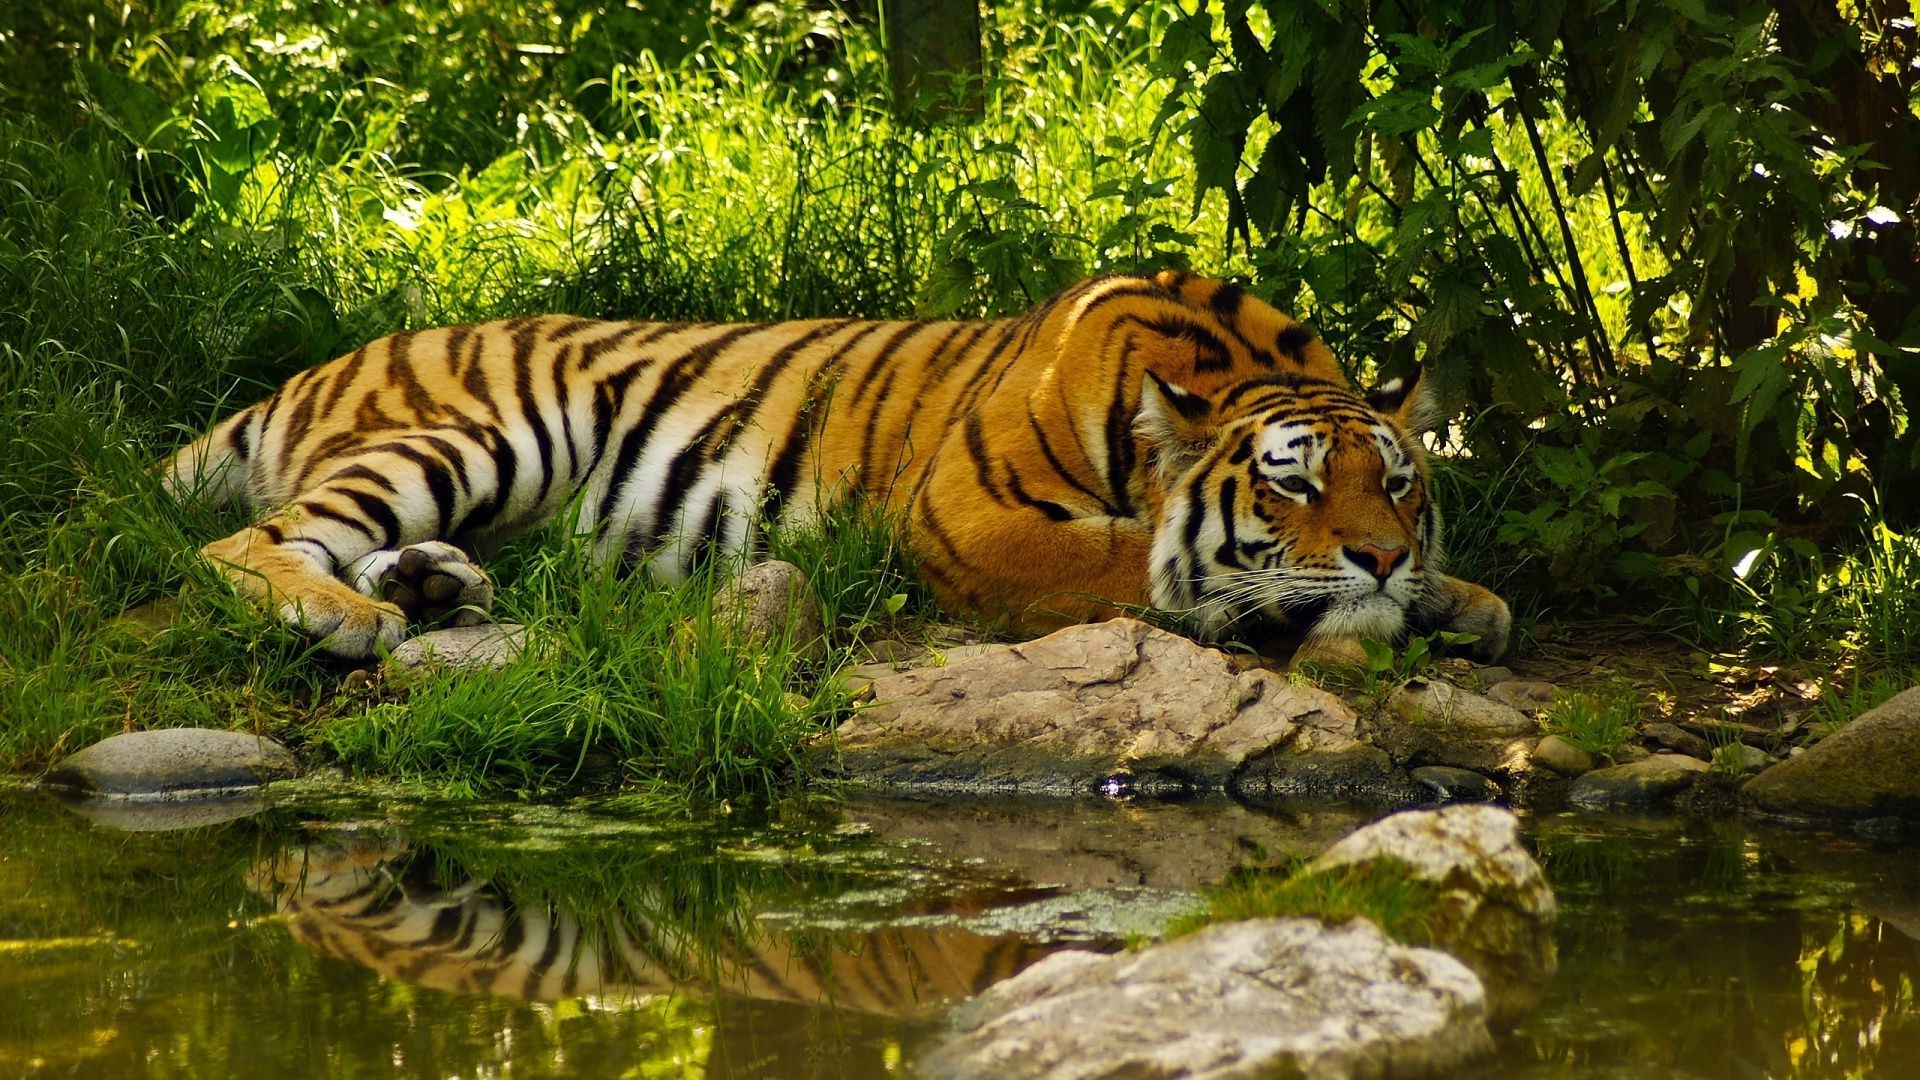 tigers tiger wildlife cat mammal jungle zoo predator hunter staring stripe safari wild aggression fur carnivore danger animal angry nature